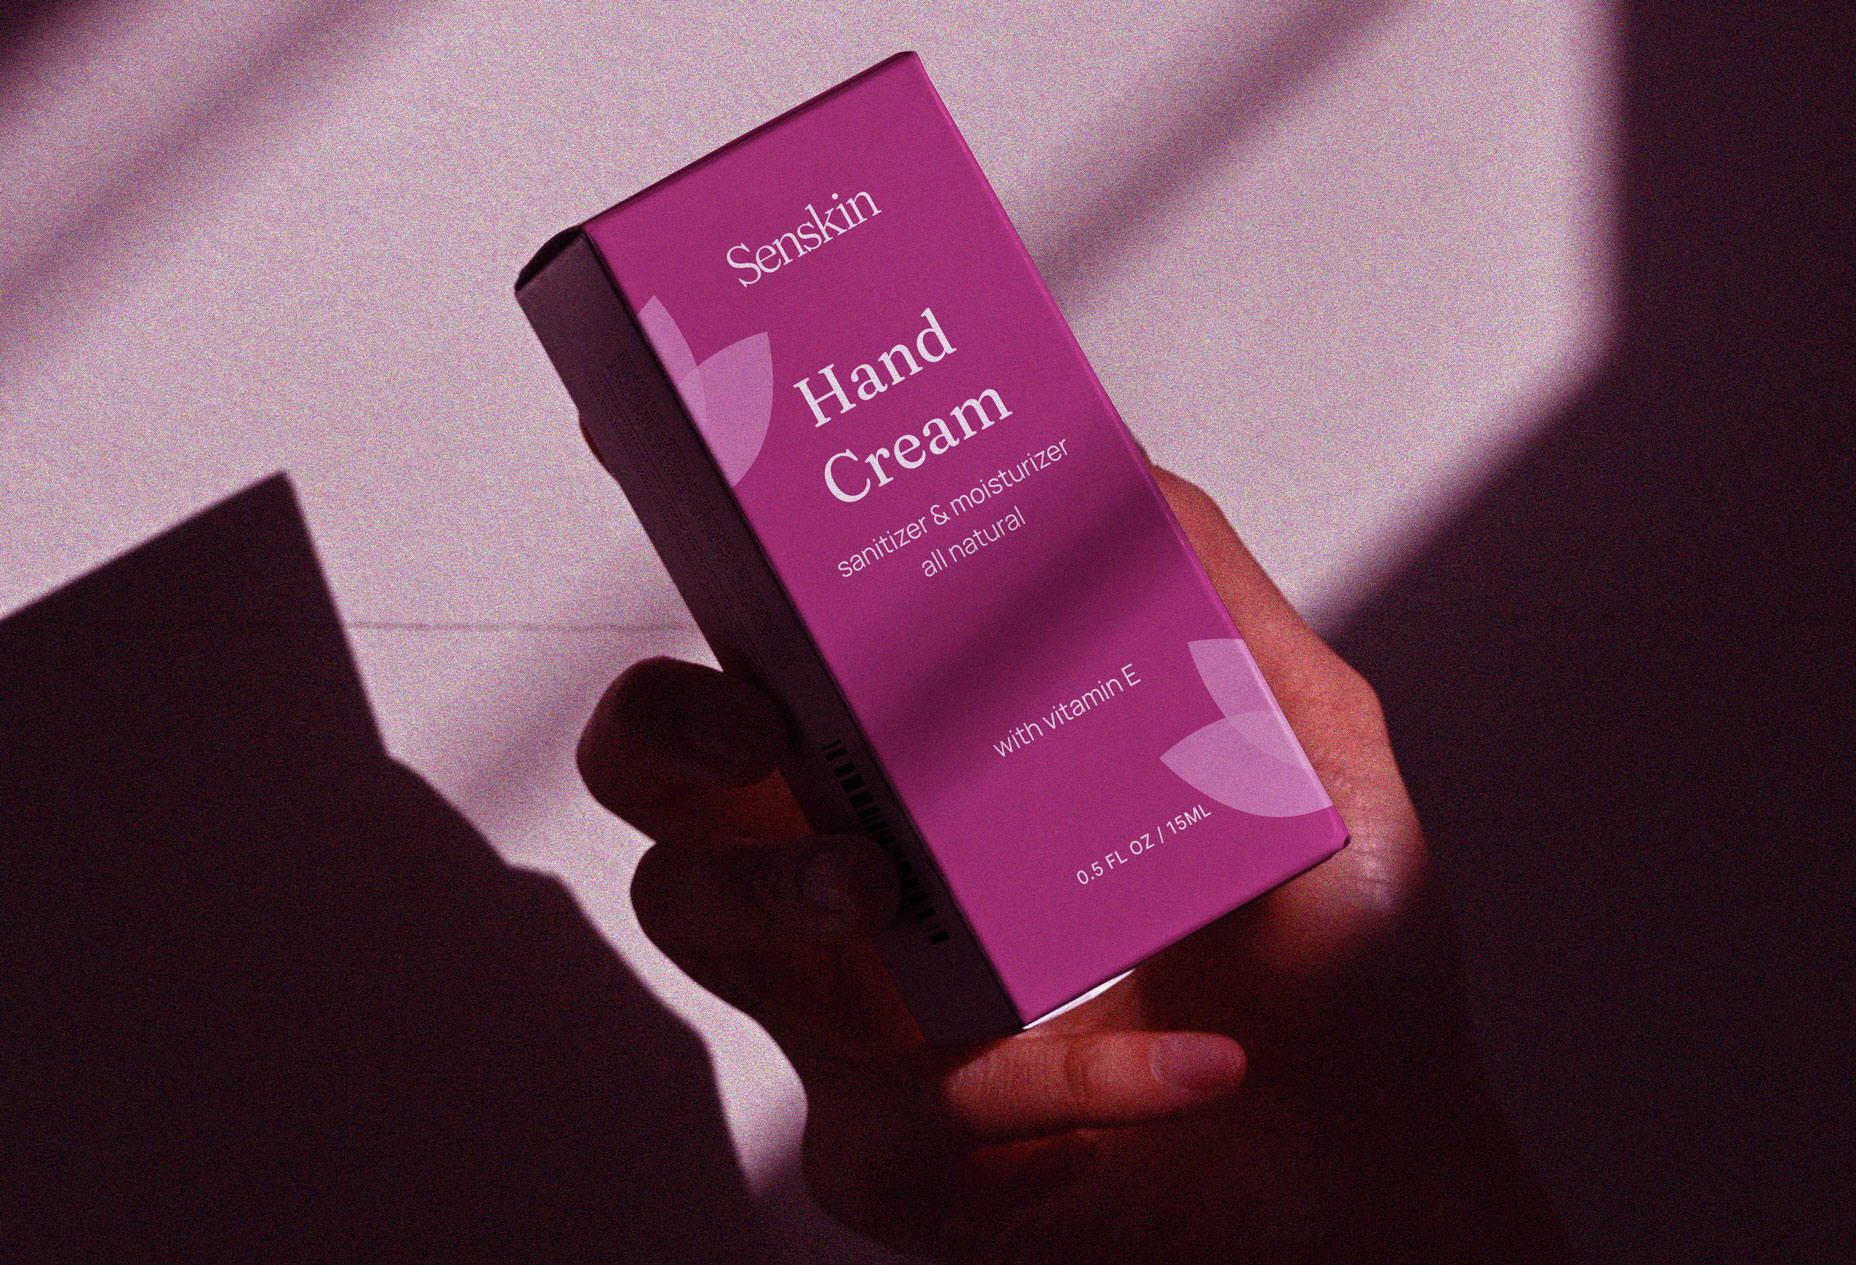 Senskin hand cream product box.